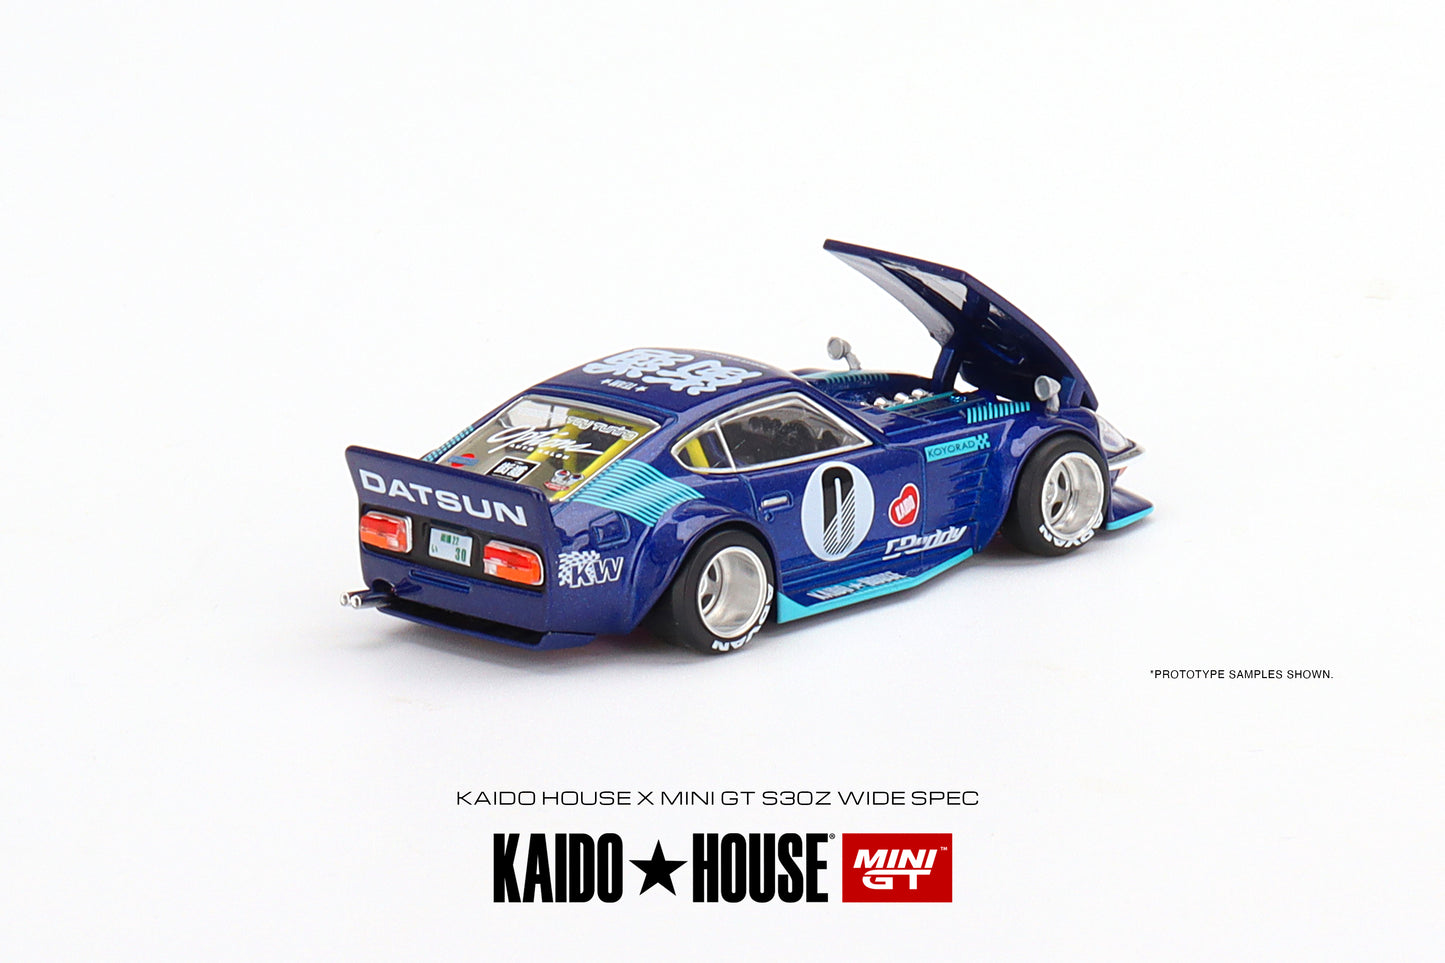 MINI GT 1/64 Kaido★House Datsun Fairlady Z Blue